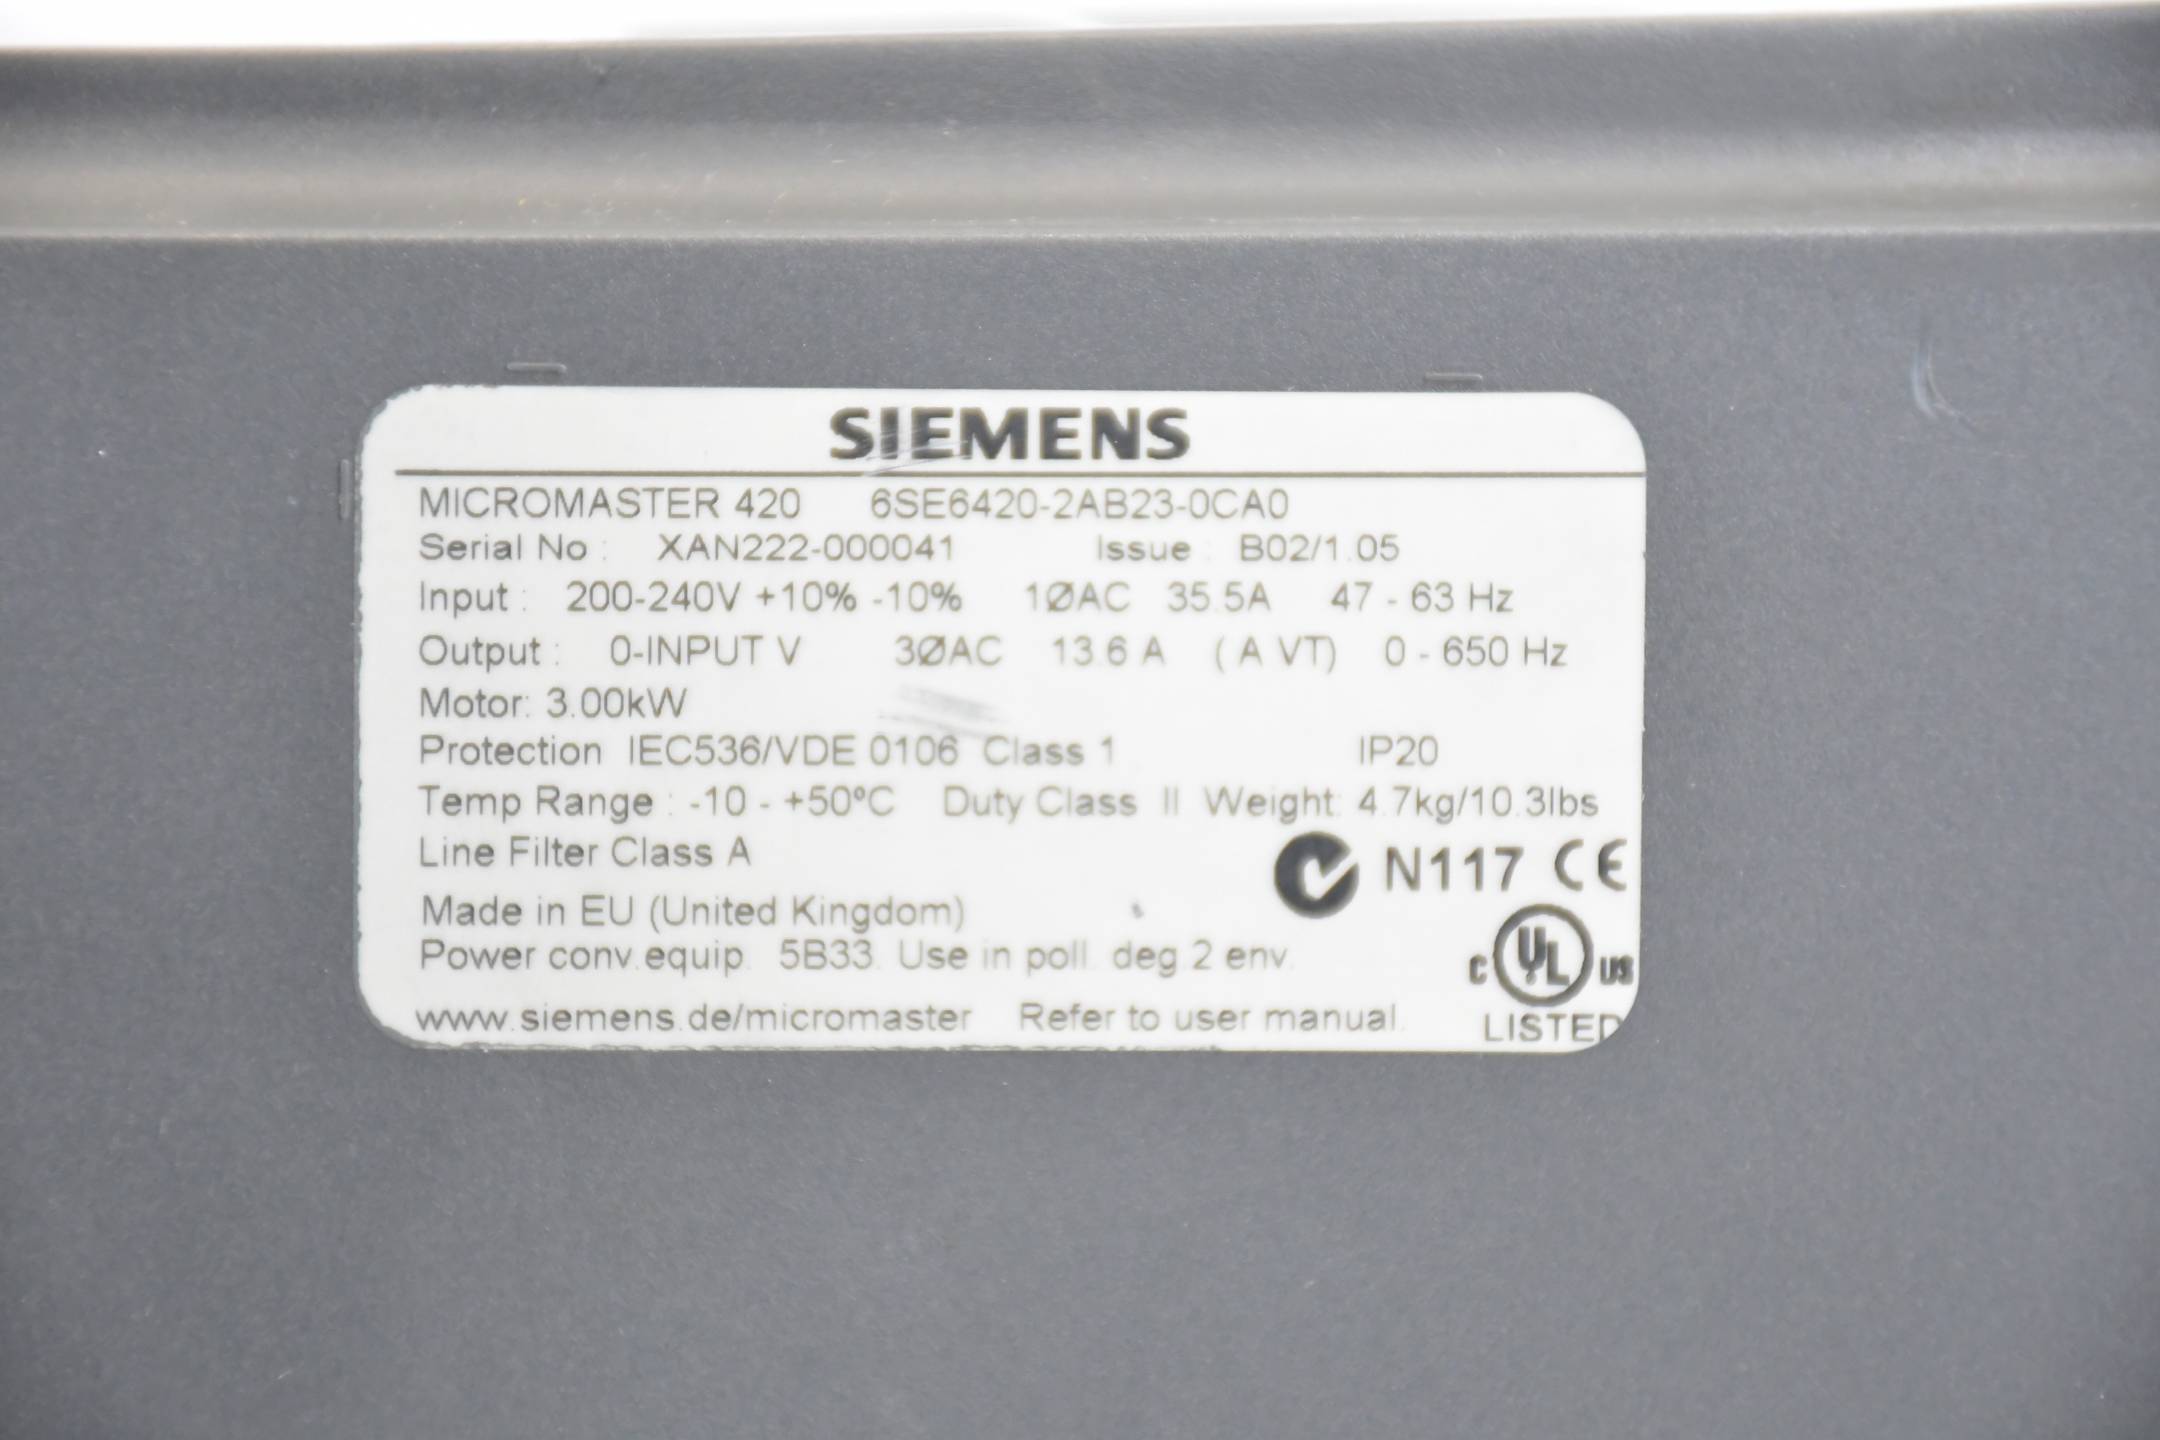 Siemens micromaster 420 6SE6420-2AB23-0CA0 ( 6SE6 420-2AB23-0CA0 ) B02/1.05